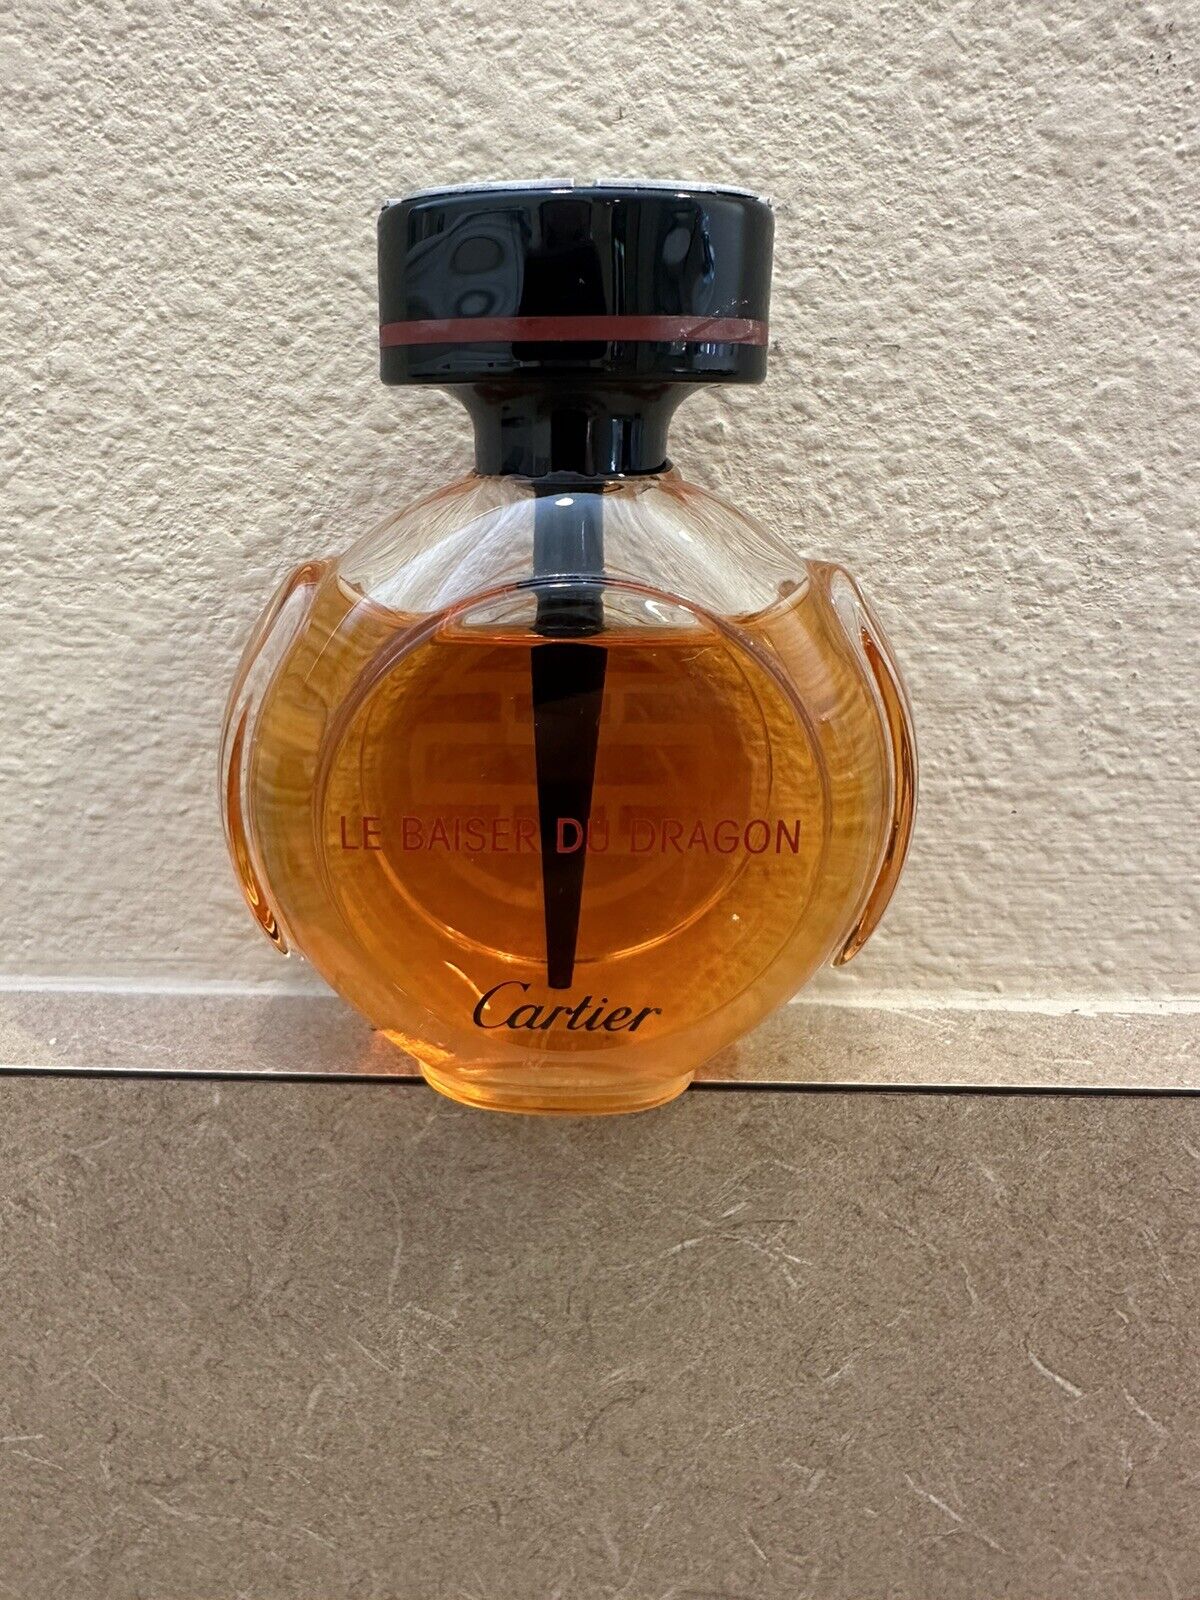 Cartier Le Baiser Du Dragon Eau de Parfum 1.6oz Perfume Spray for Women 90% Full